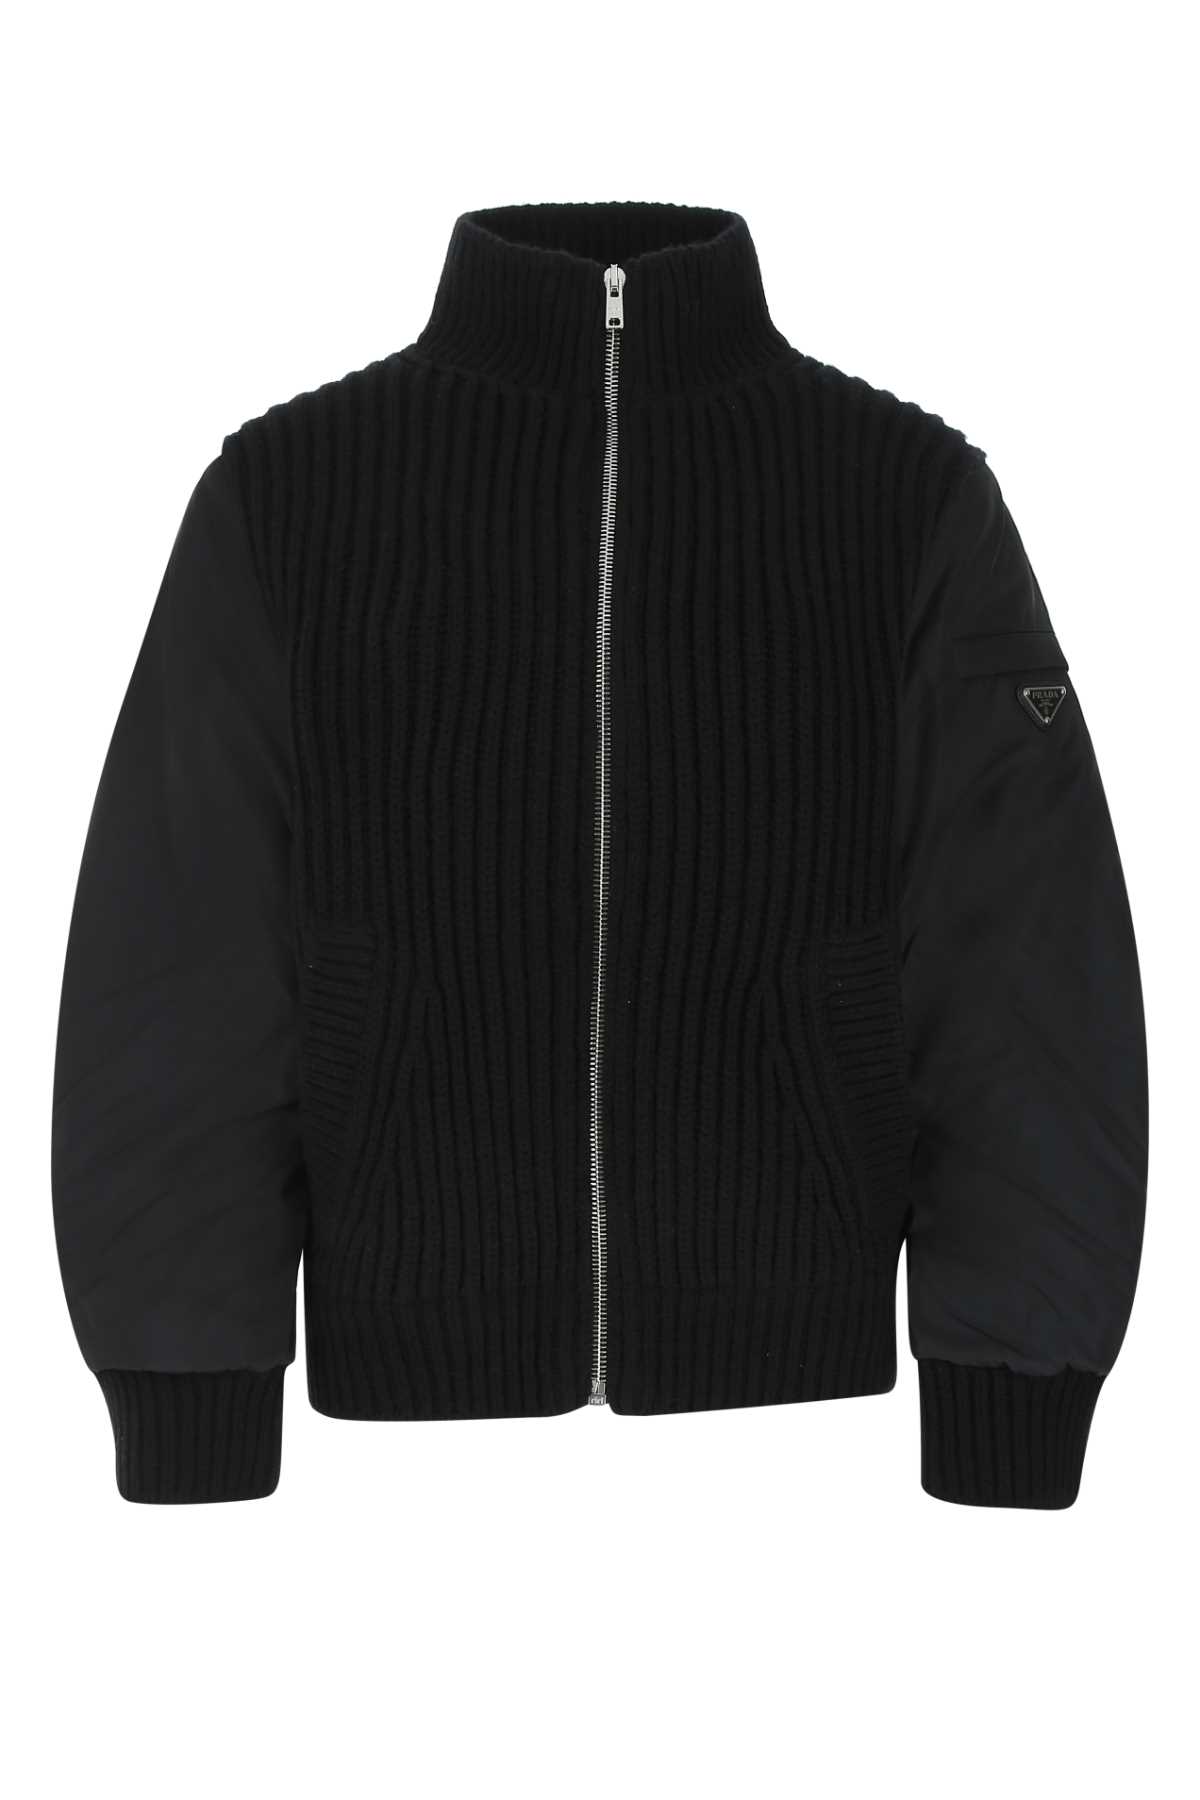 Black Cashmere And Re-nylon Jacket